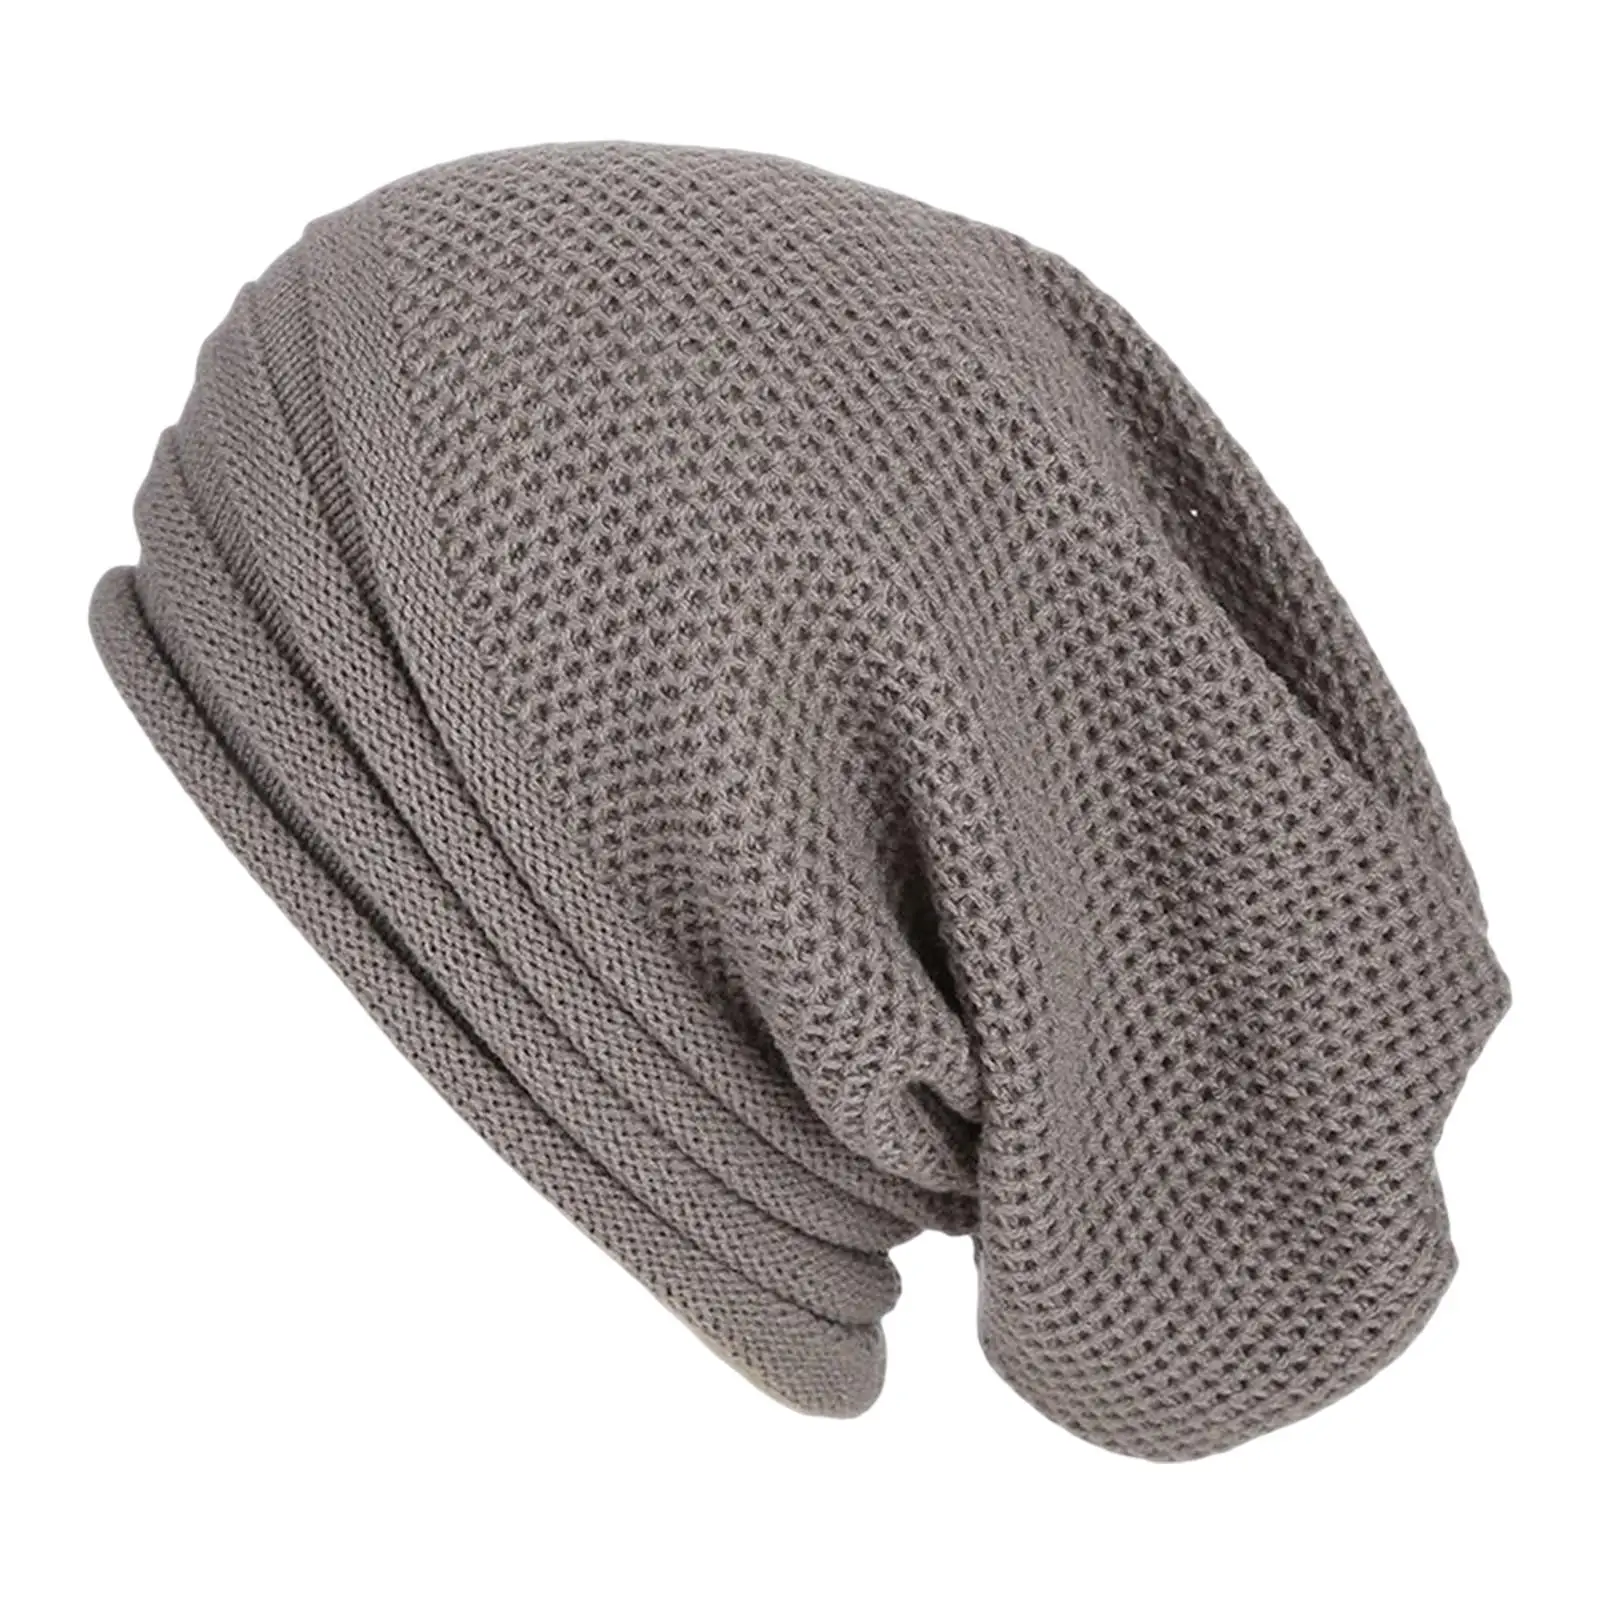 Casual Winter Beanie Hats Warmer Knit Lightweight Slouchy Windproof Soft for Running Walking Hiking Outdoor Adults Men Women